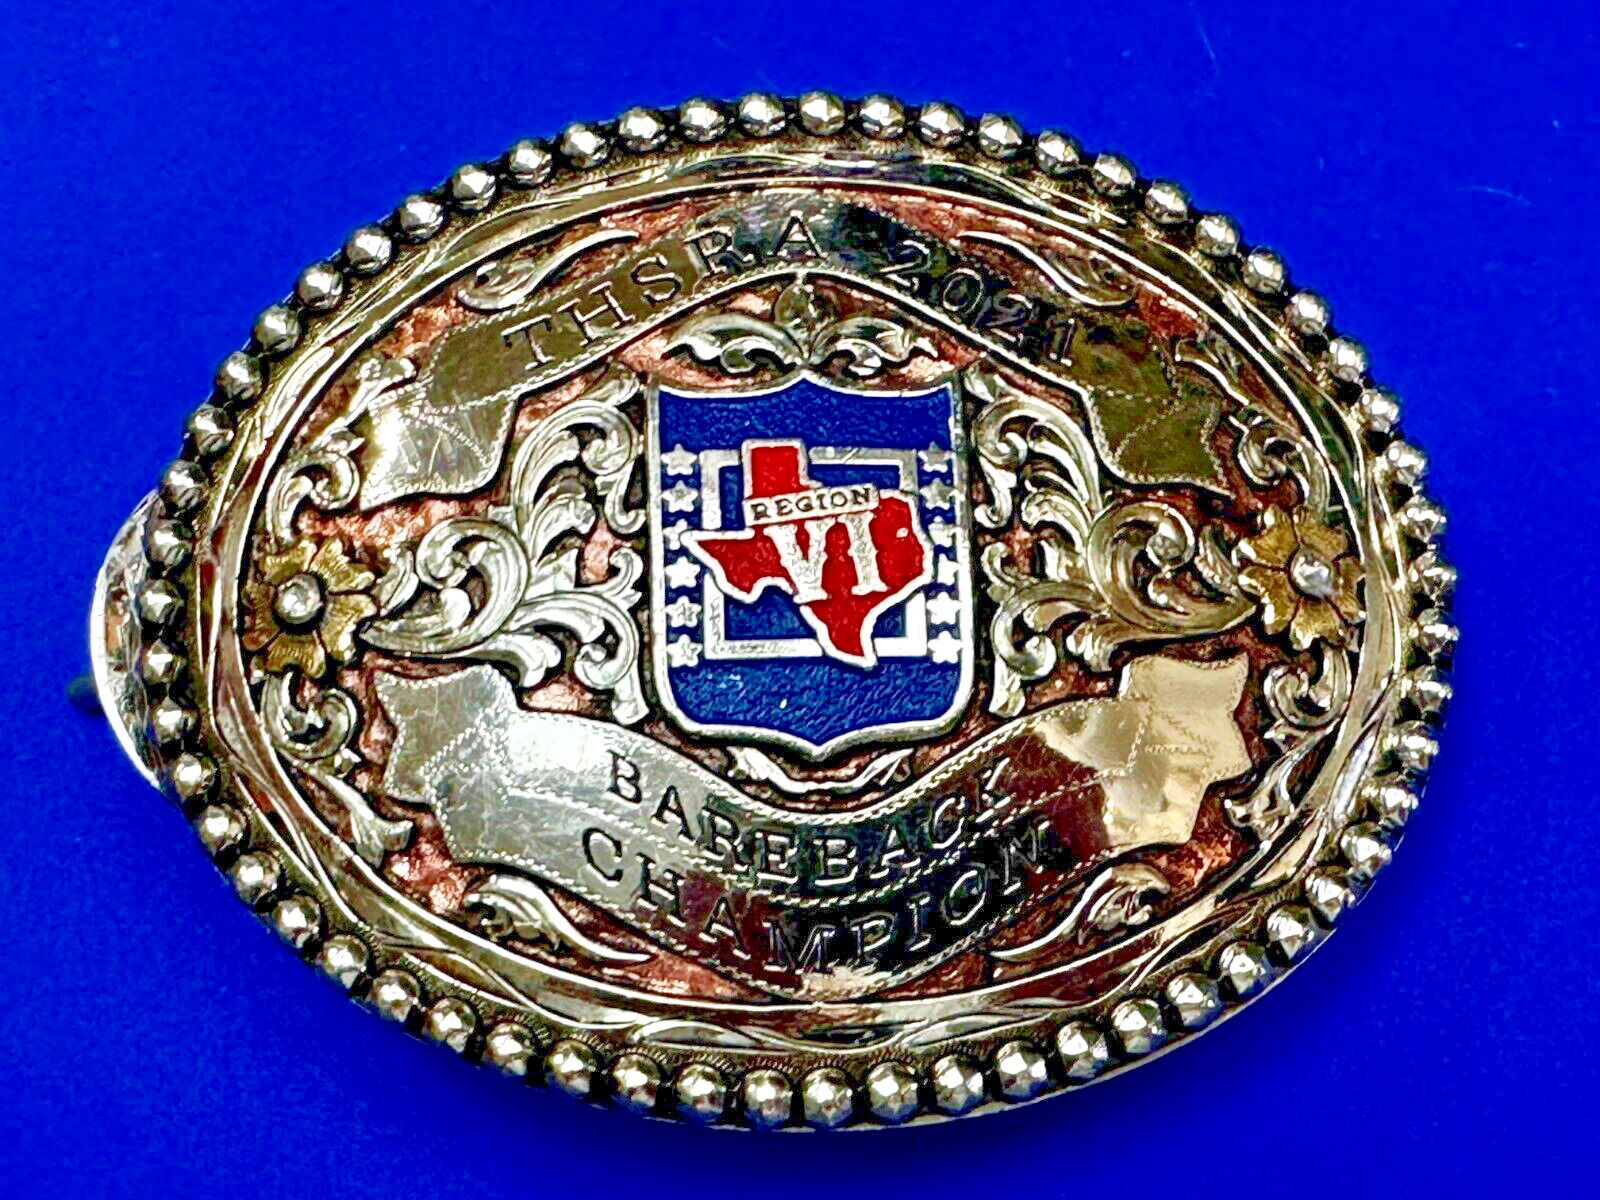 TJHRA Texas Jr. Rodeo 2021 Bareback Steer Riding Champion Trophy Belt Buckle